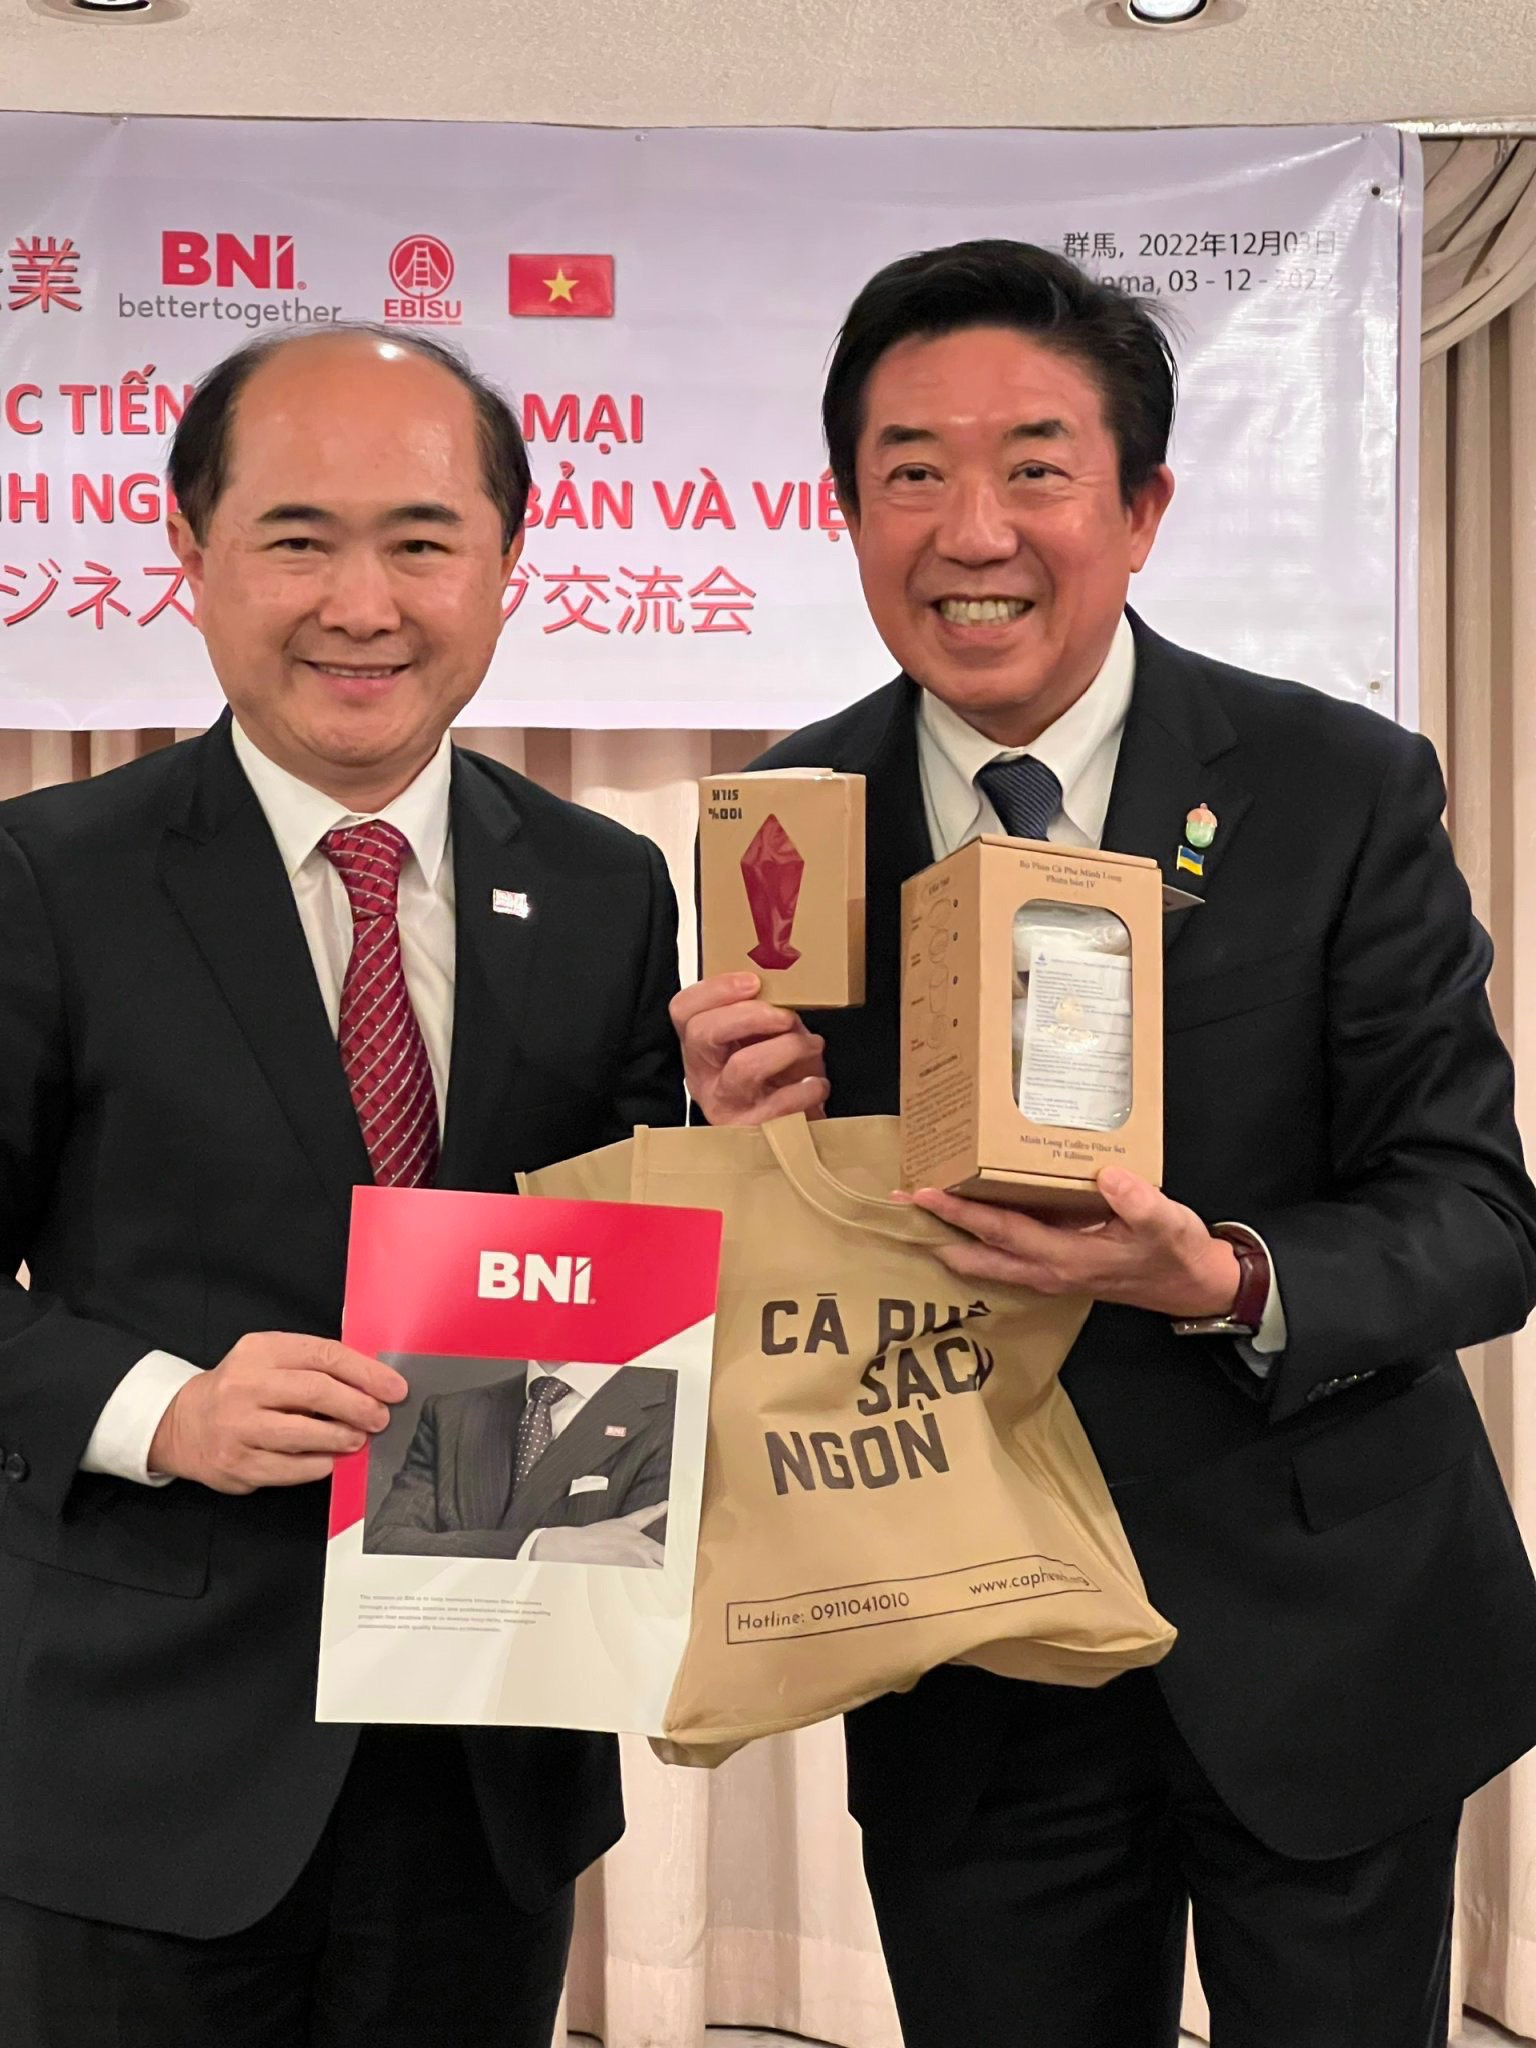 Mr. Ho Quang Minh - President of BNI Vietnam introduced Vietnamese clean coffee to the mayor - Mr. RYU YAMAMOTO.